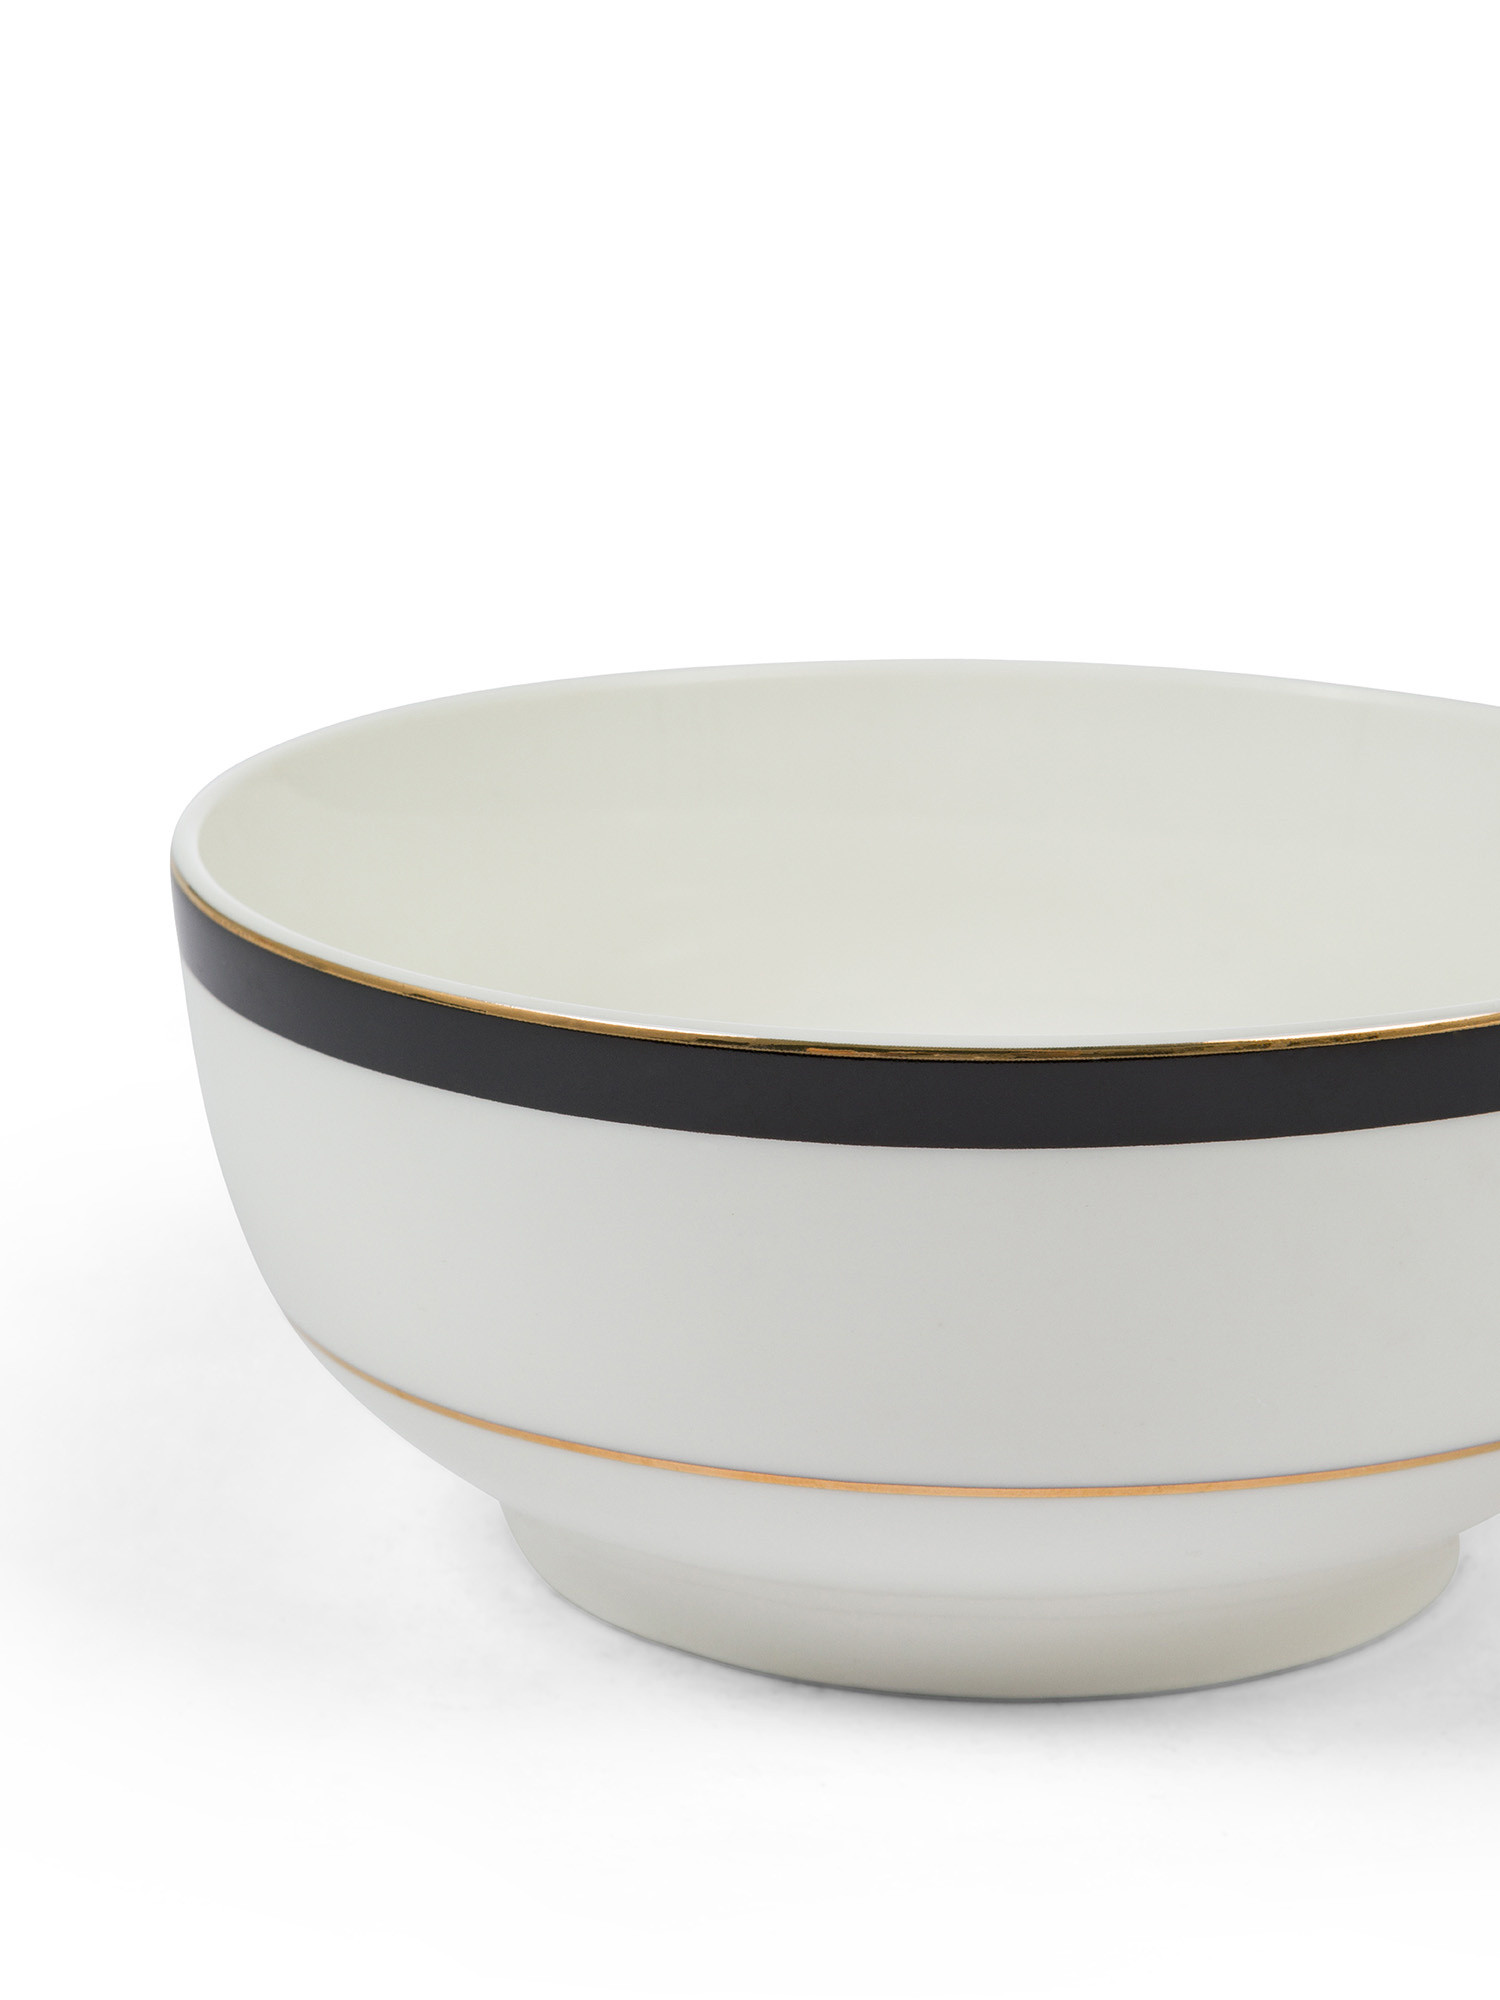 New bone china bowl with black thread, White, large image number 1